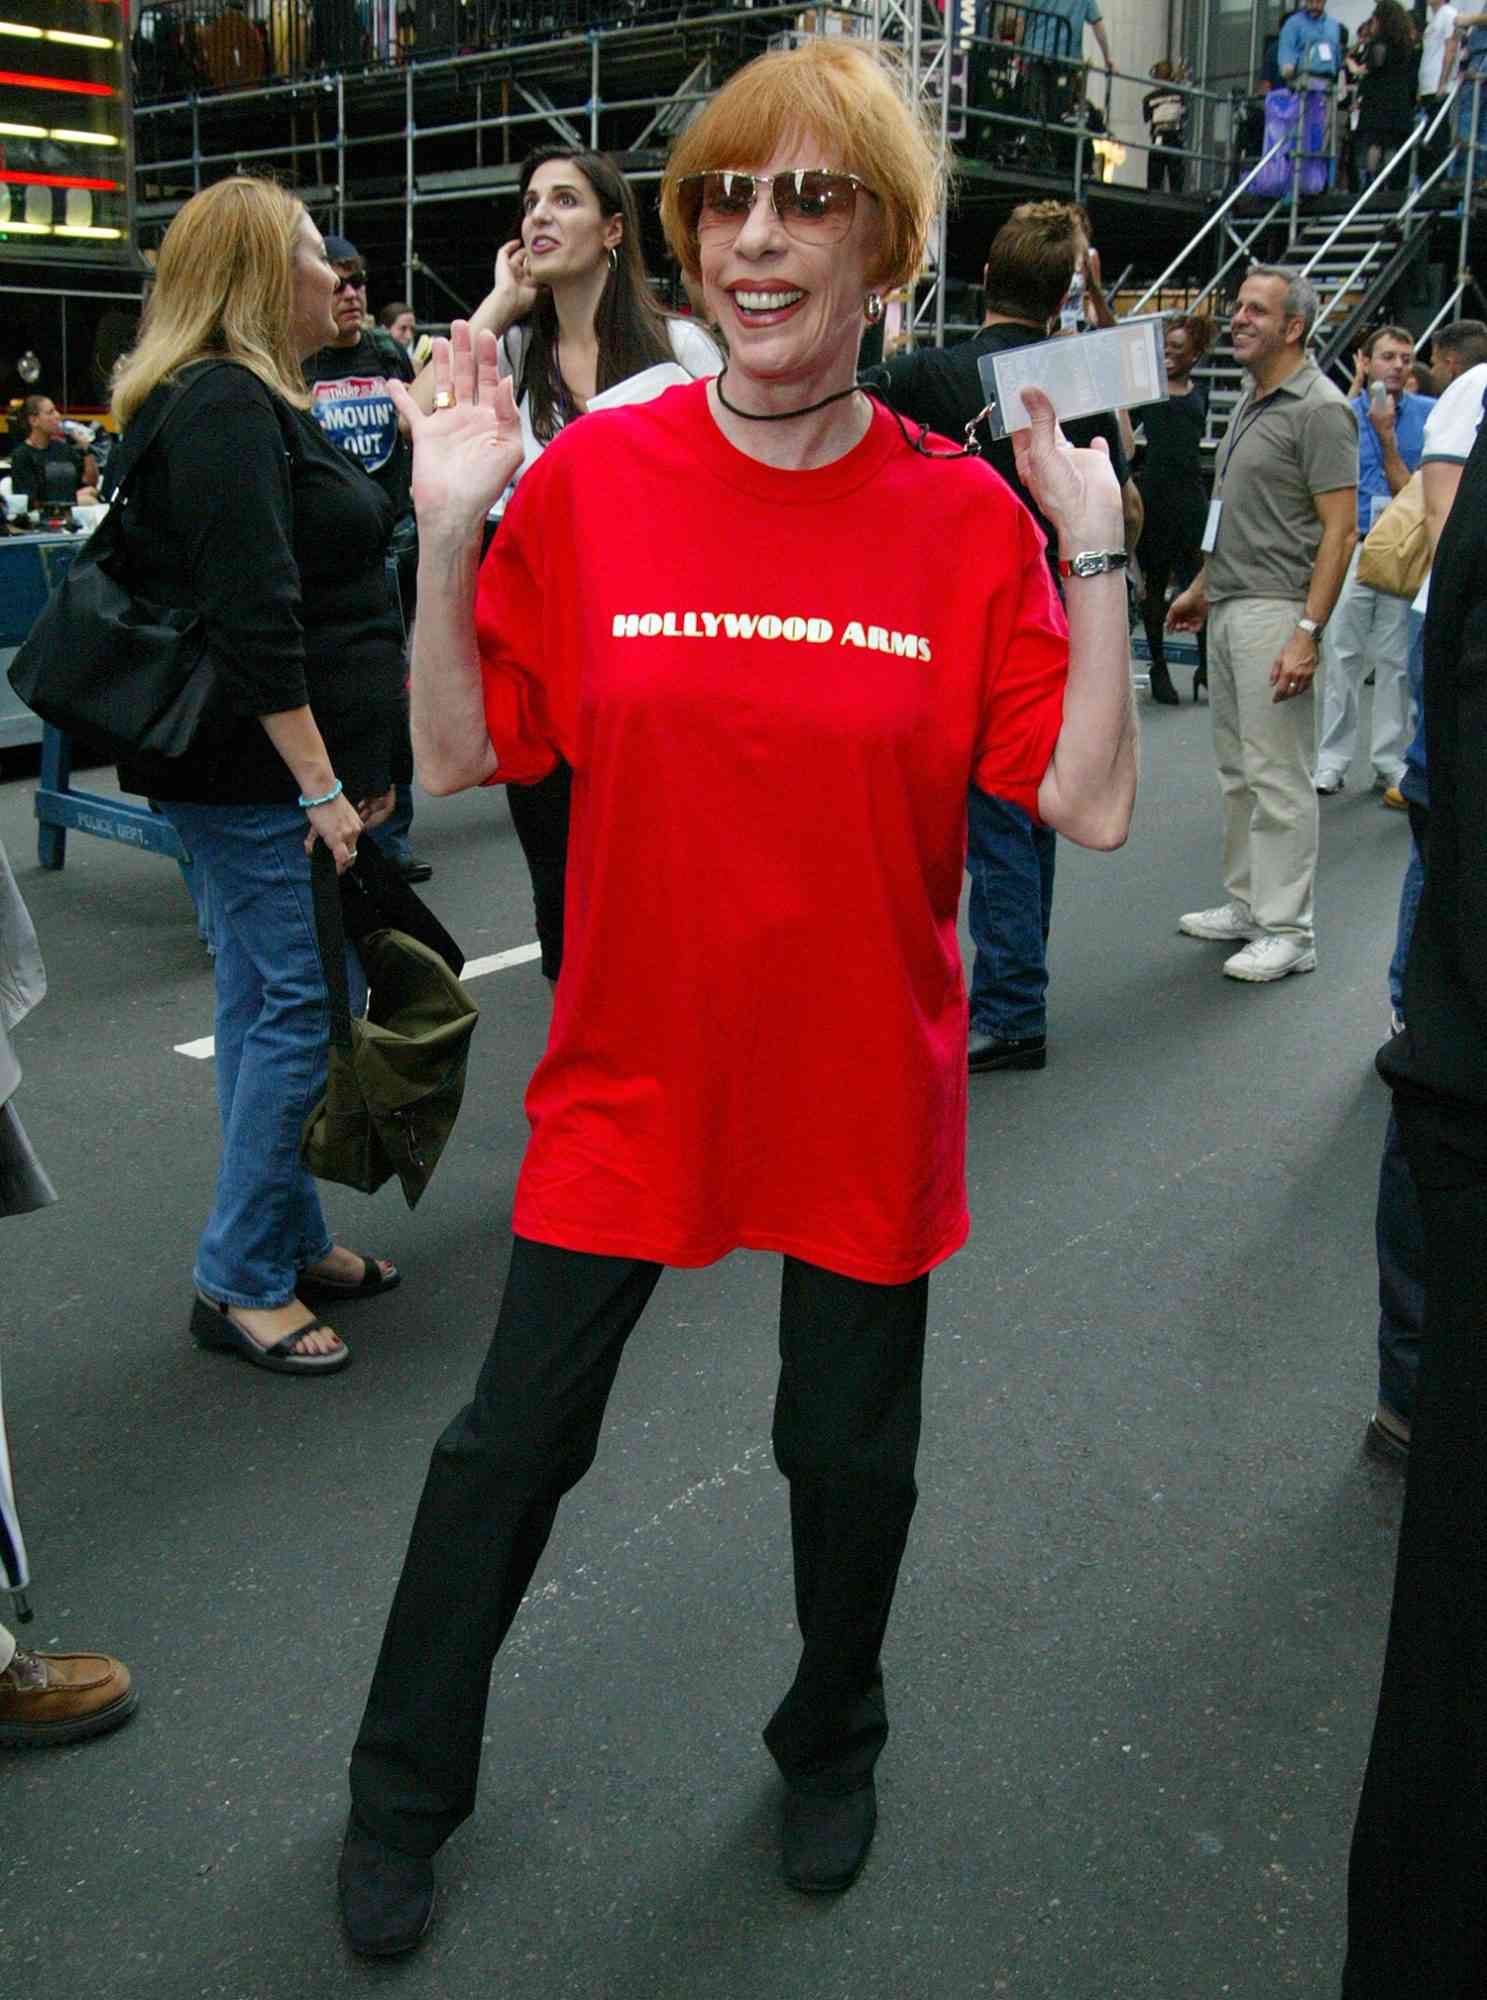 Carol Burnett attends "Broadway On Broadway" in Times Square